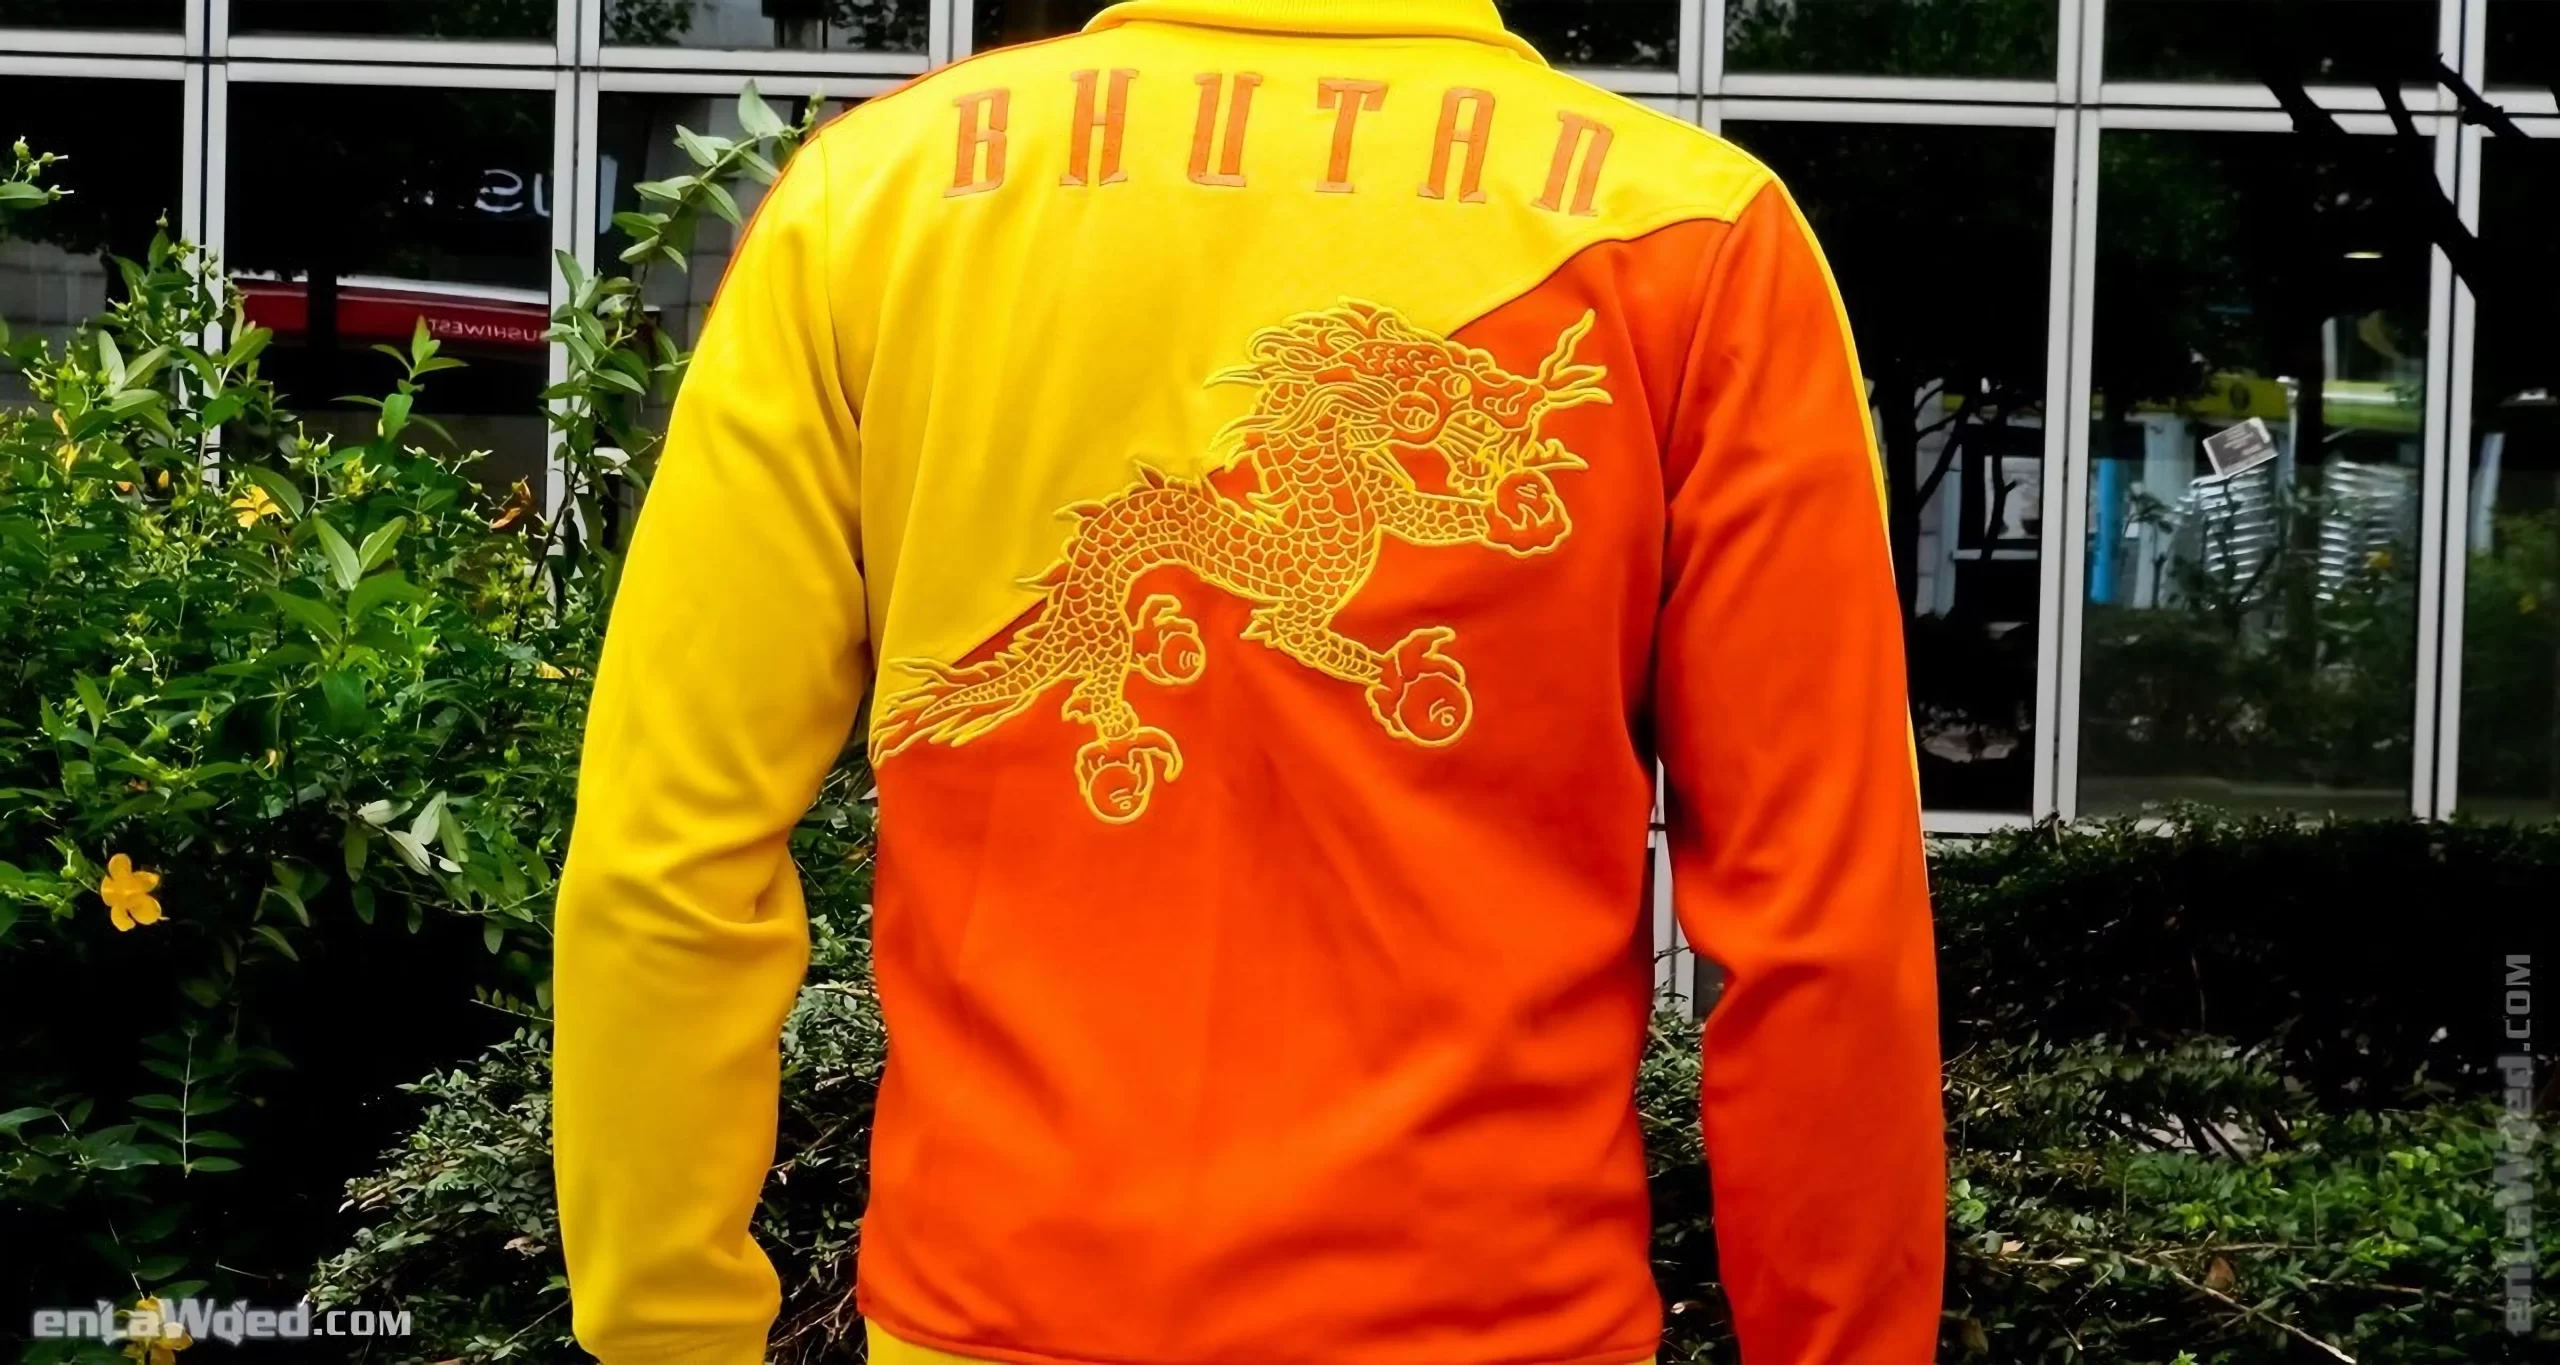 Men’s 2007 Bhutan Track Top by Adidas Originals: Arrogant (EnLawded.com file #lmchk90651ip2y123228kg9st)